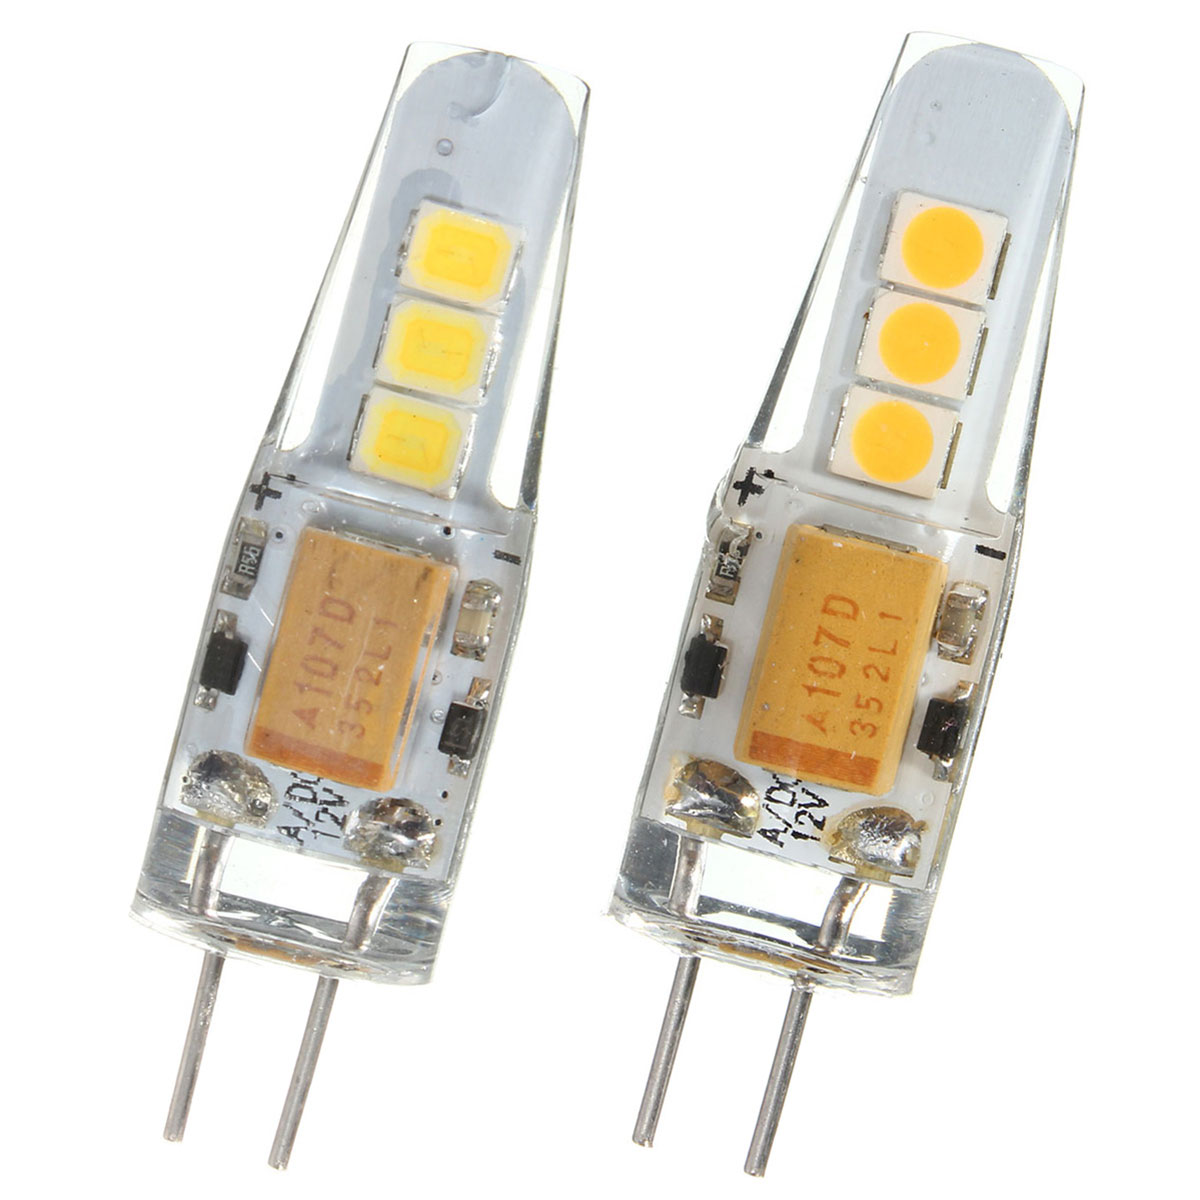 Mini-G4-LED-Corn-Bulb-2W-6-SMD-2835-Silicone-Crystal-Lamp-Light-DC12V-1065960-5